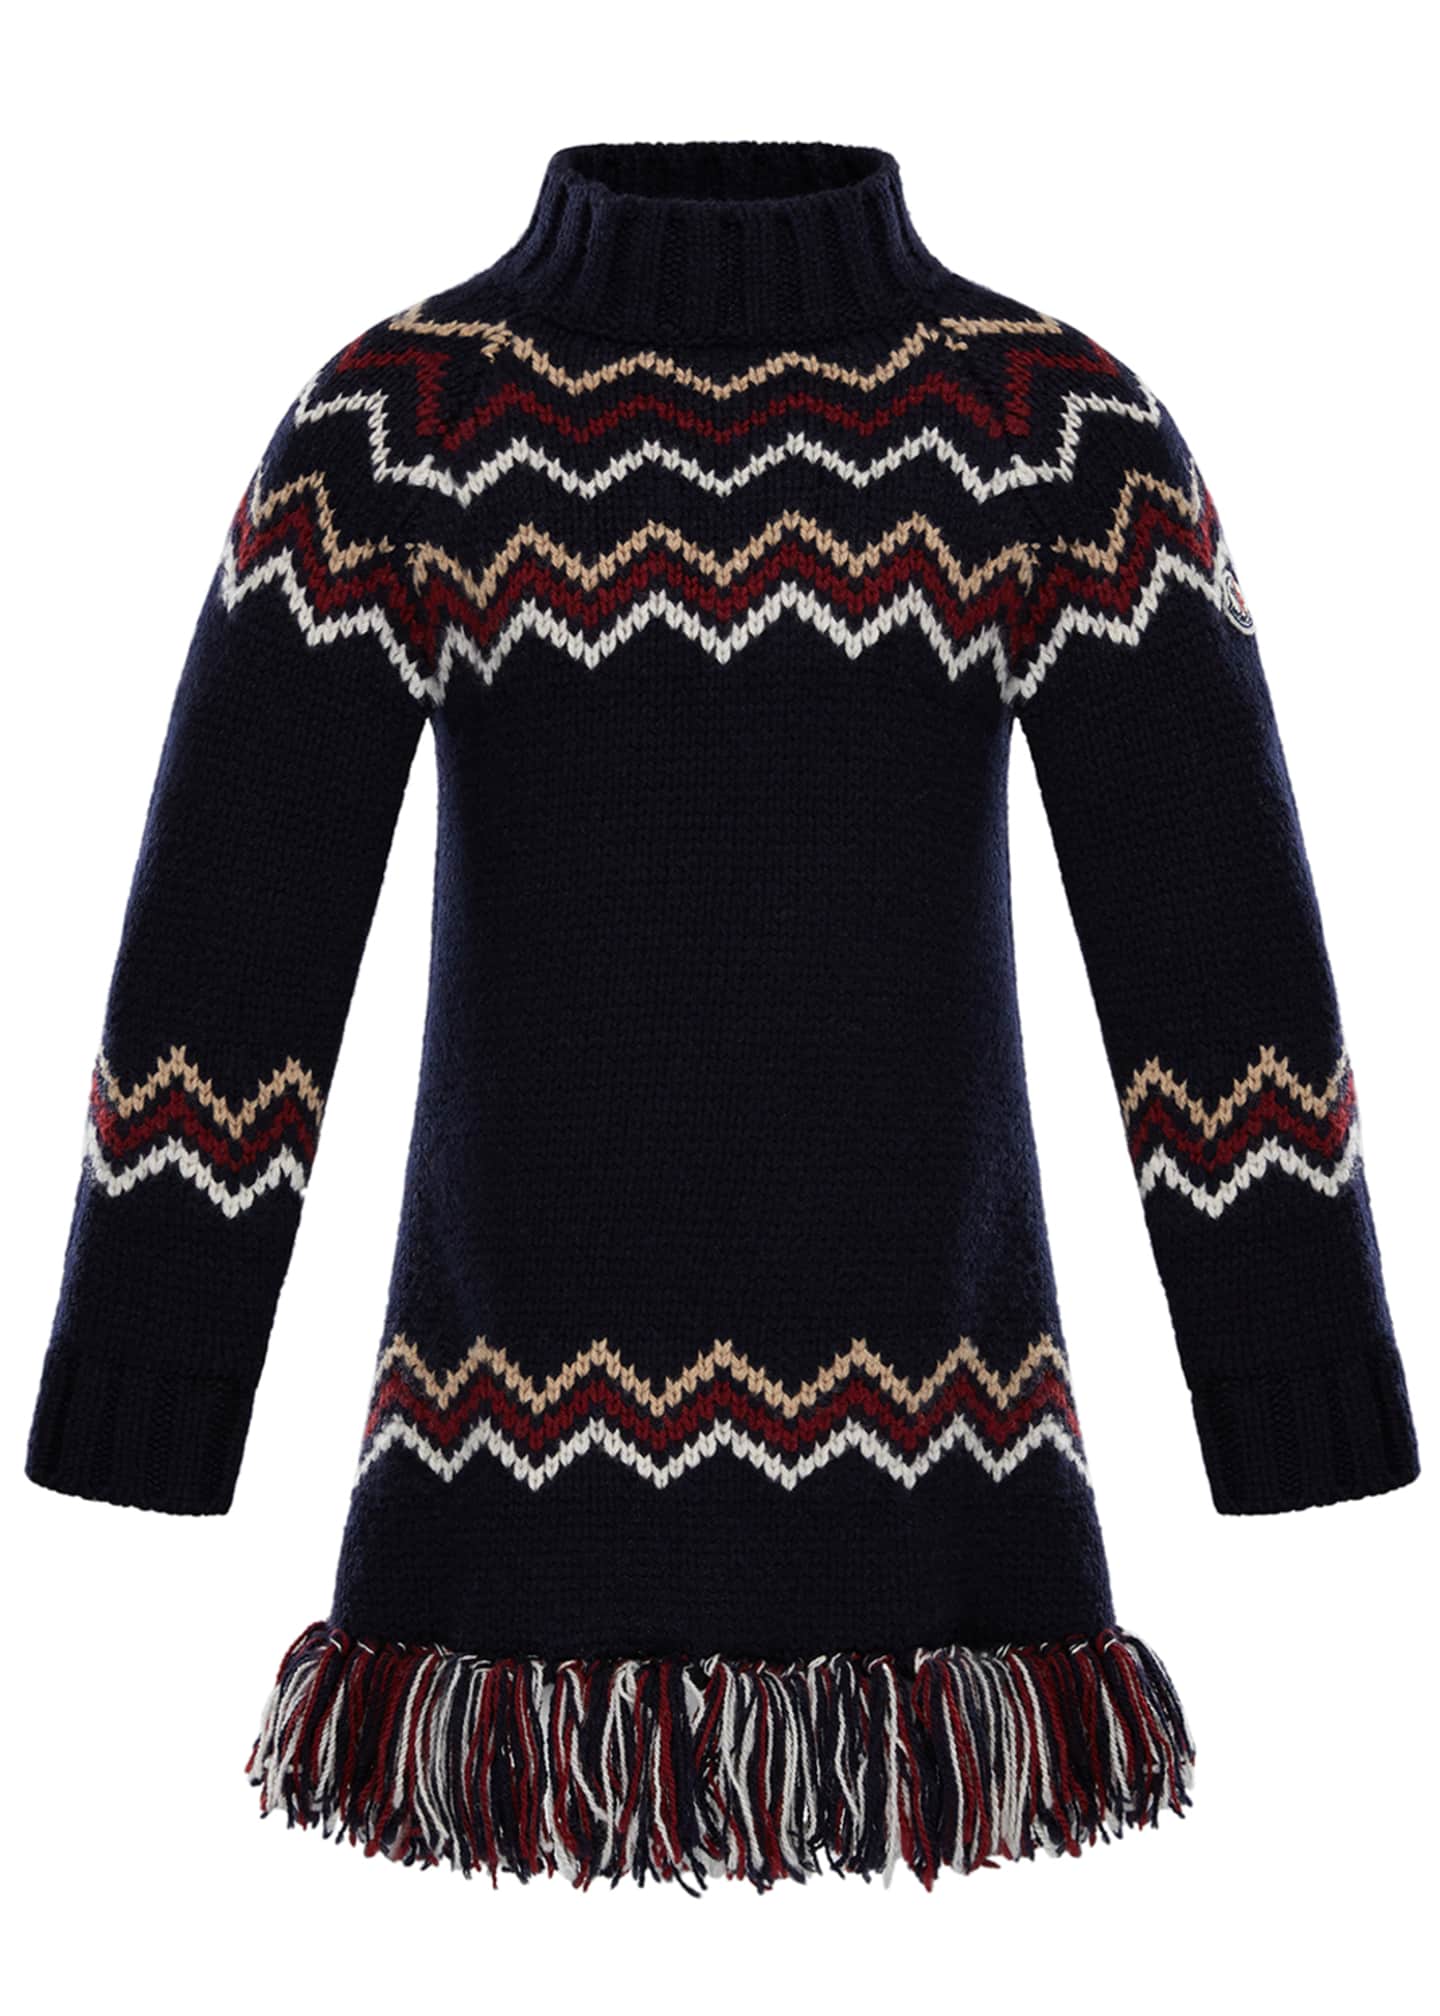 Moncler Abito Tricot Wool-Cashmere Knit Dress, Size 4-6